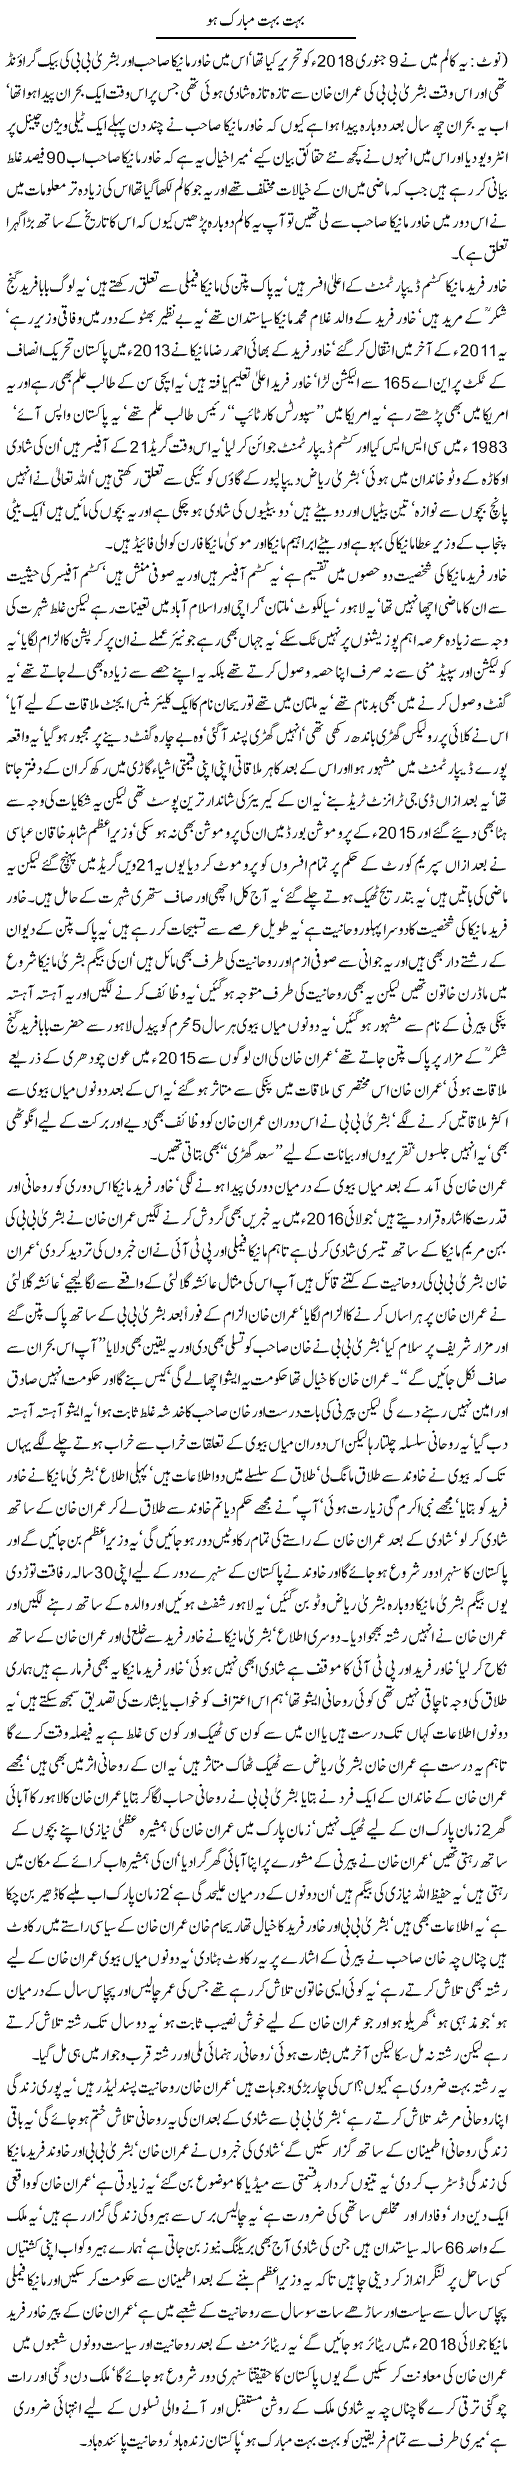 Javed Chaudhry Column About Khawar Manika And Bushra Bibi Family Background